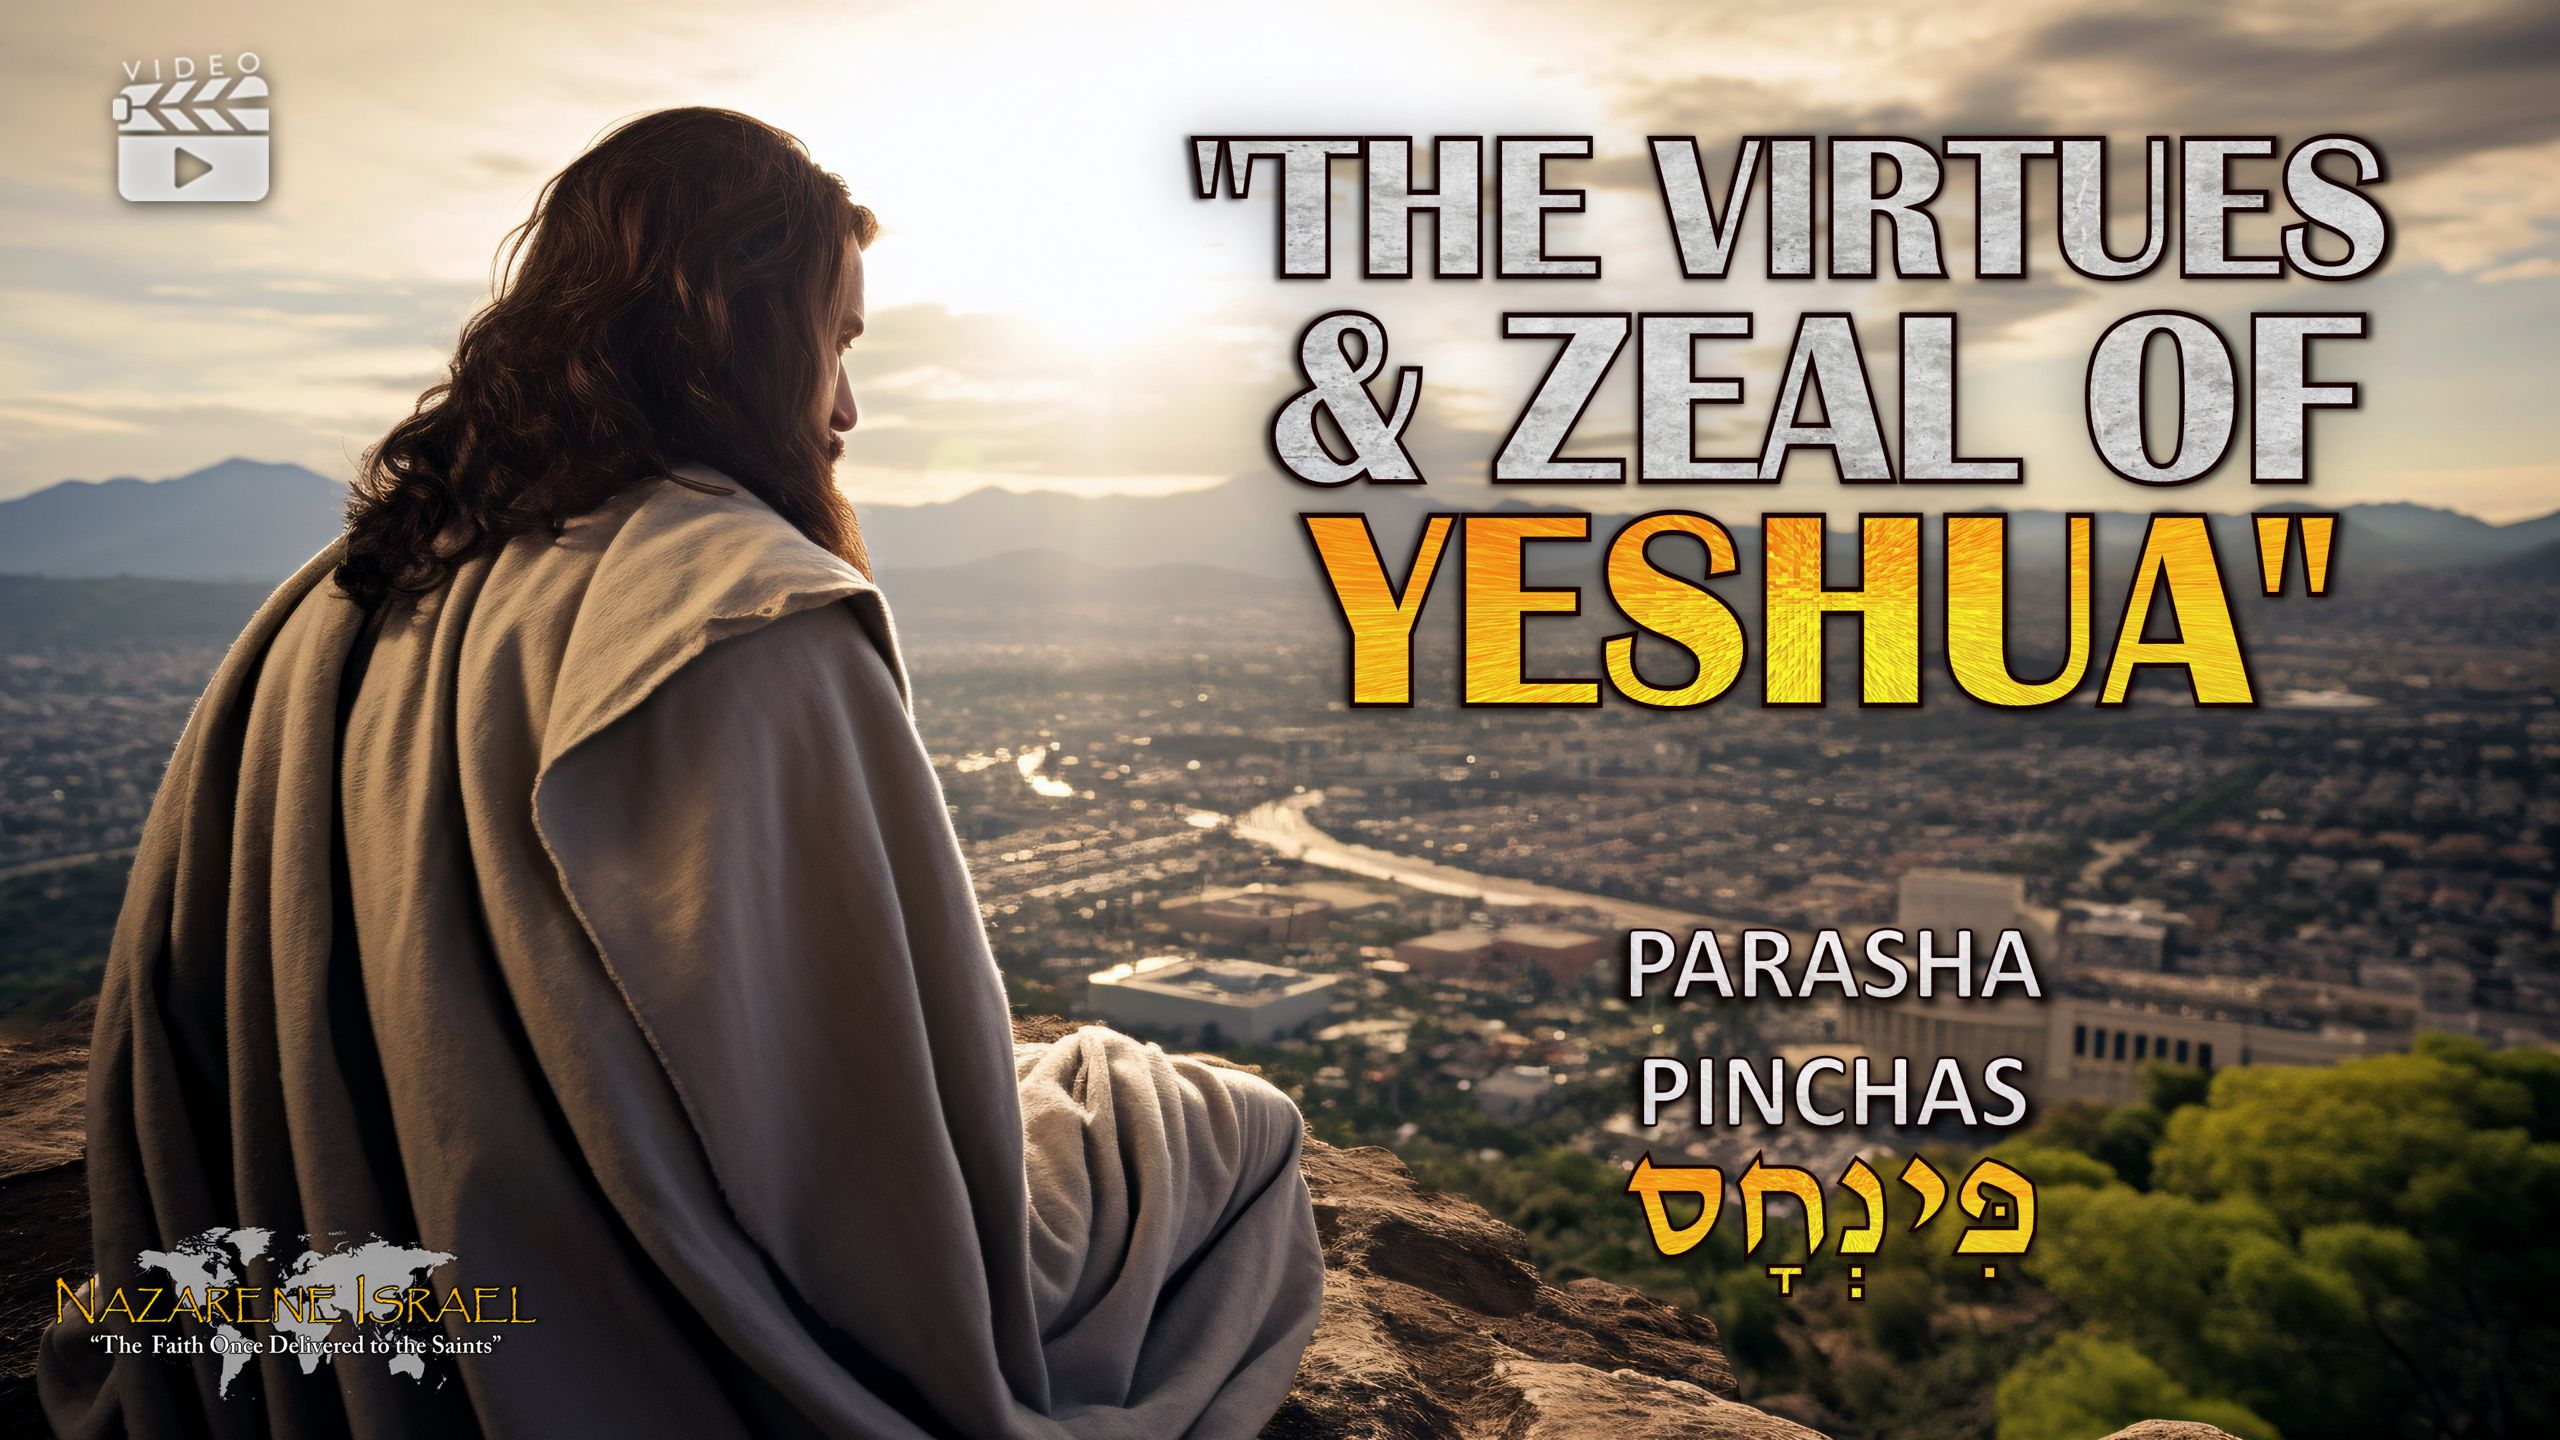 Parasha Pinchas – The Virtues and Zeal of Yahweh